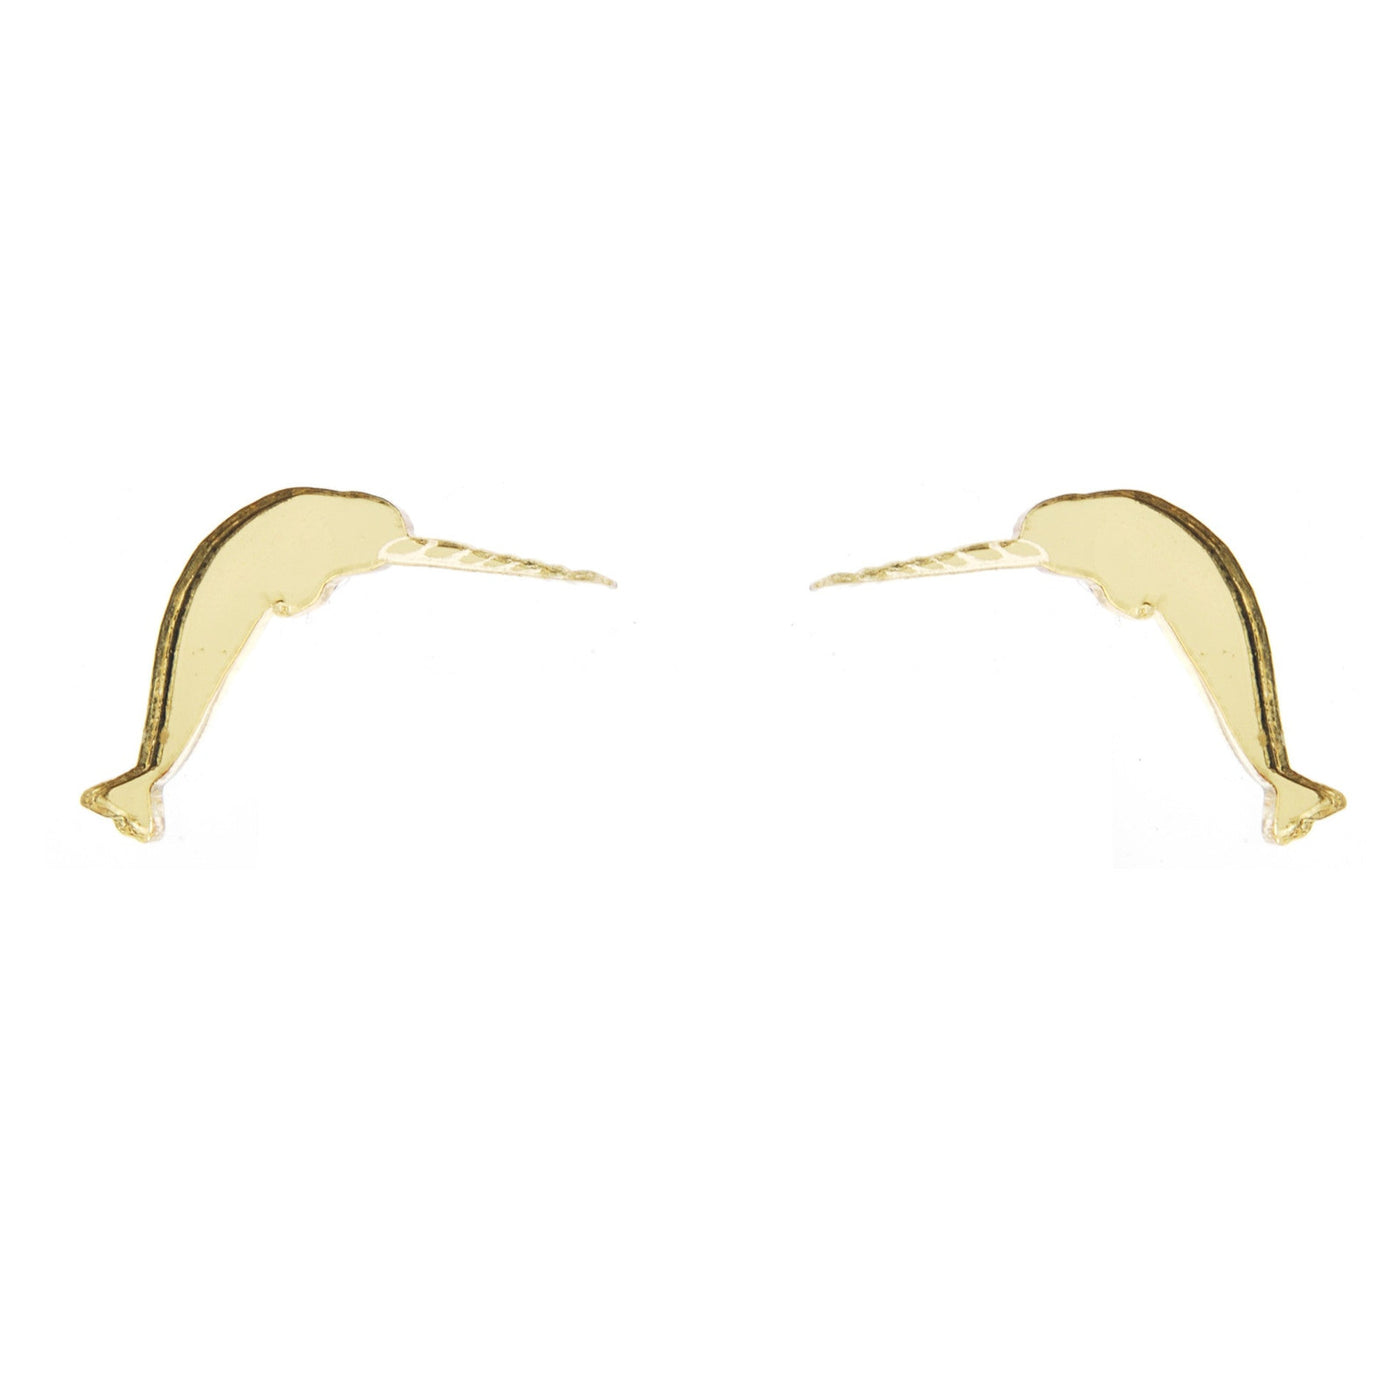 SALE! Narwhal Earrings in Mirror Gold